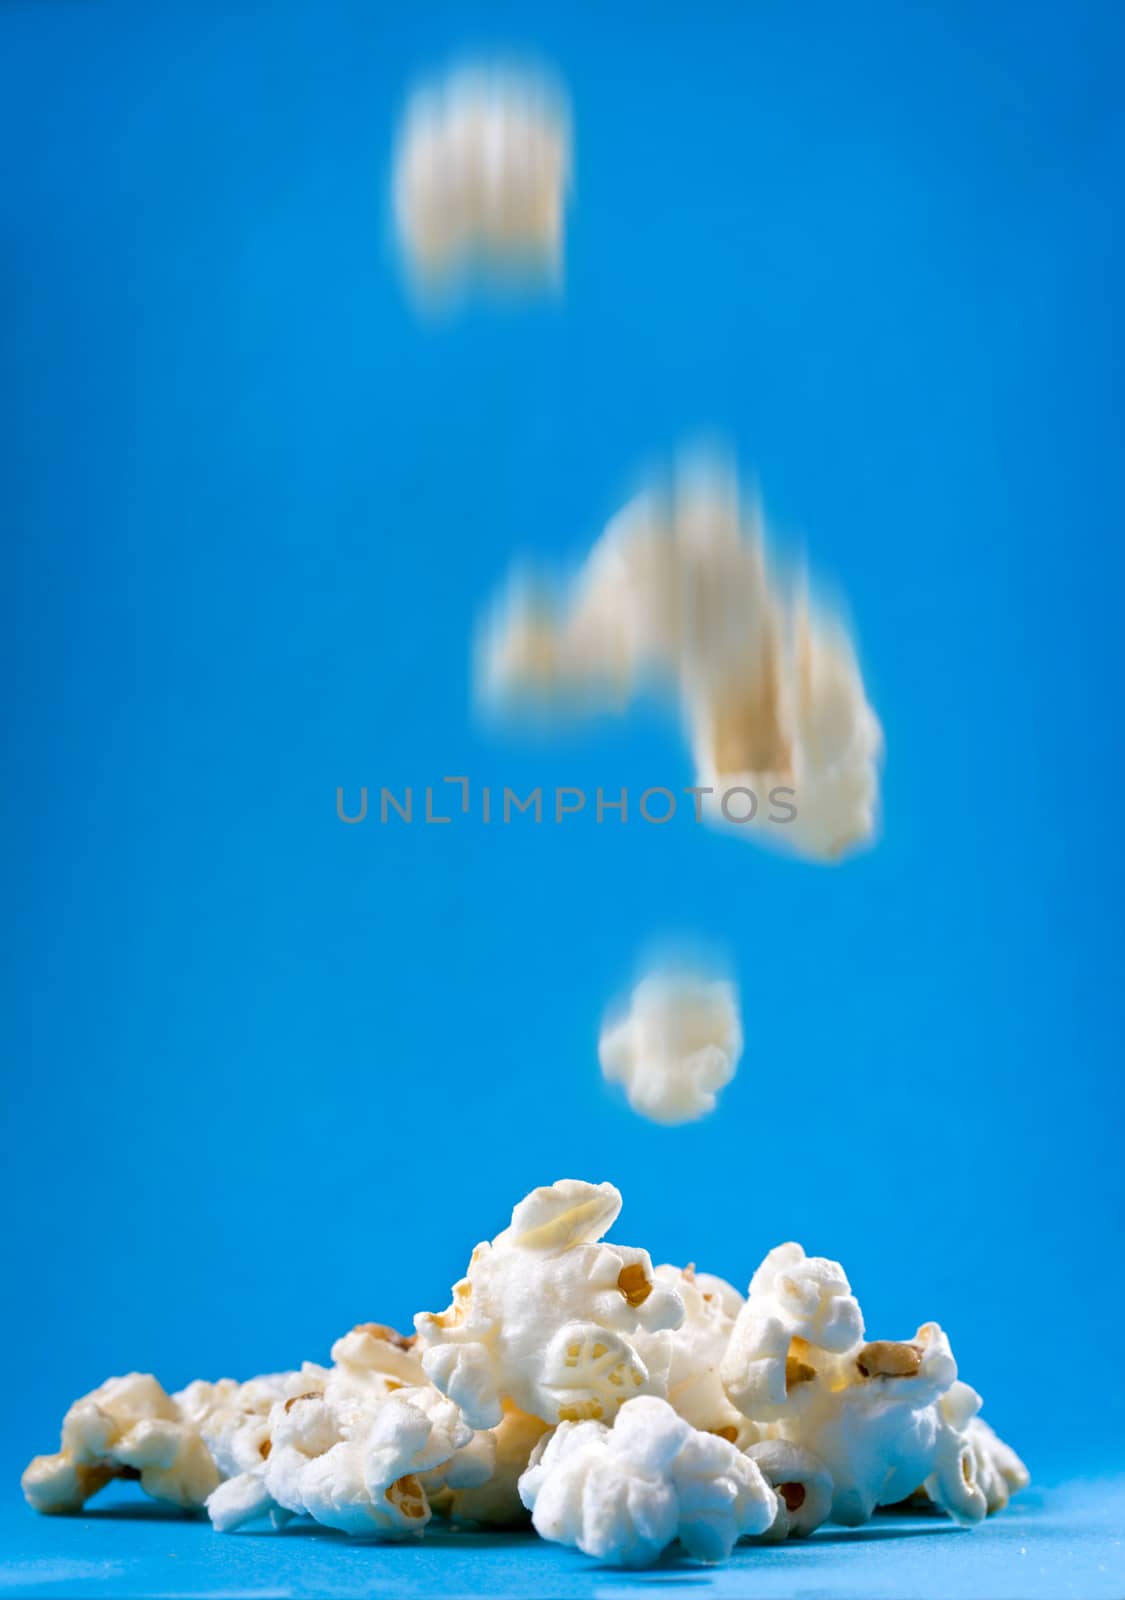 Popcorn on the blue background